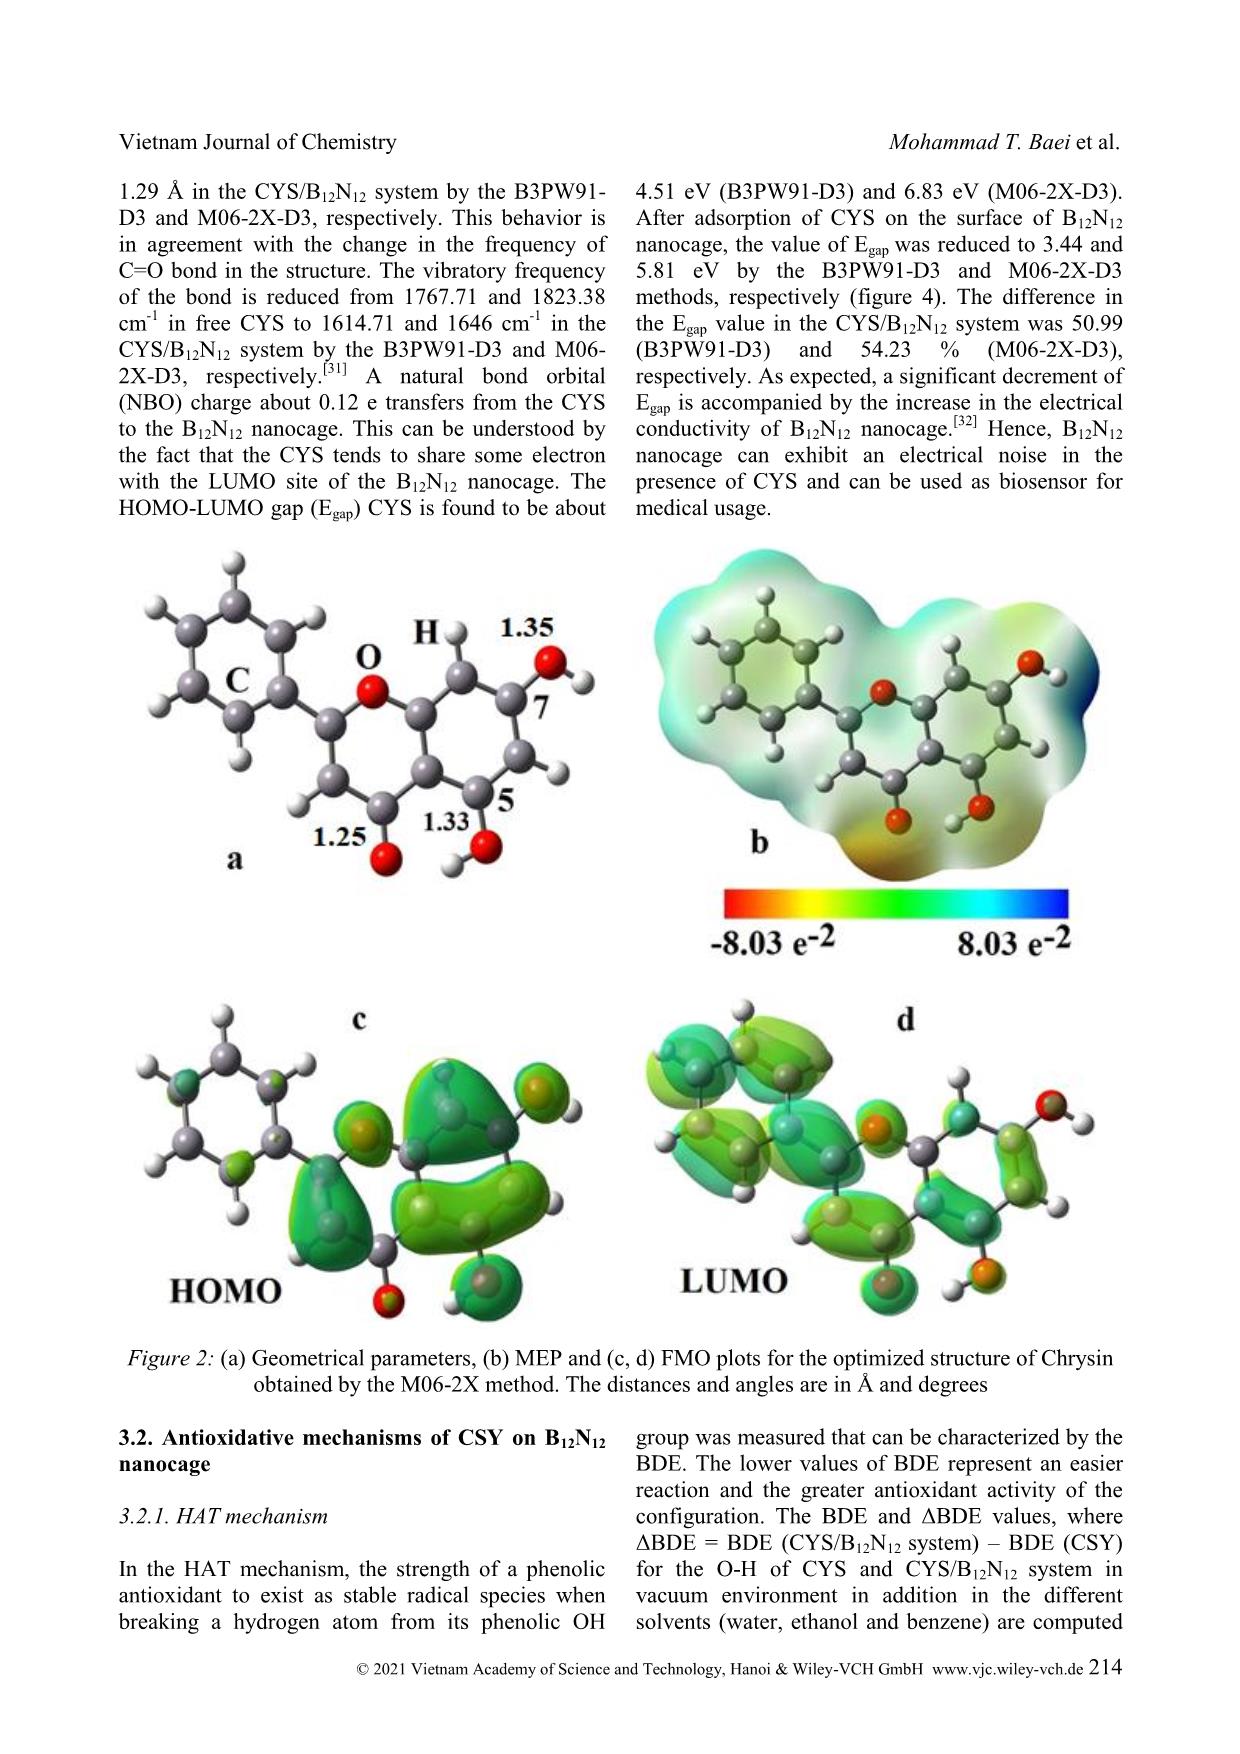 Chrysin flavonoid adsorbed on B12N12 nanocage - A novel antioxidant nanomaterial trang 4